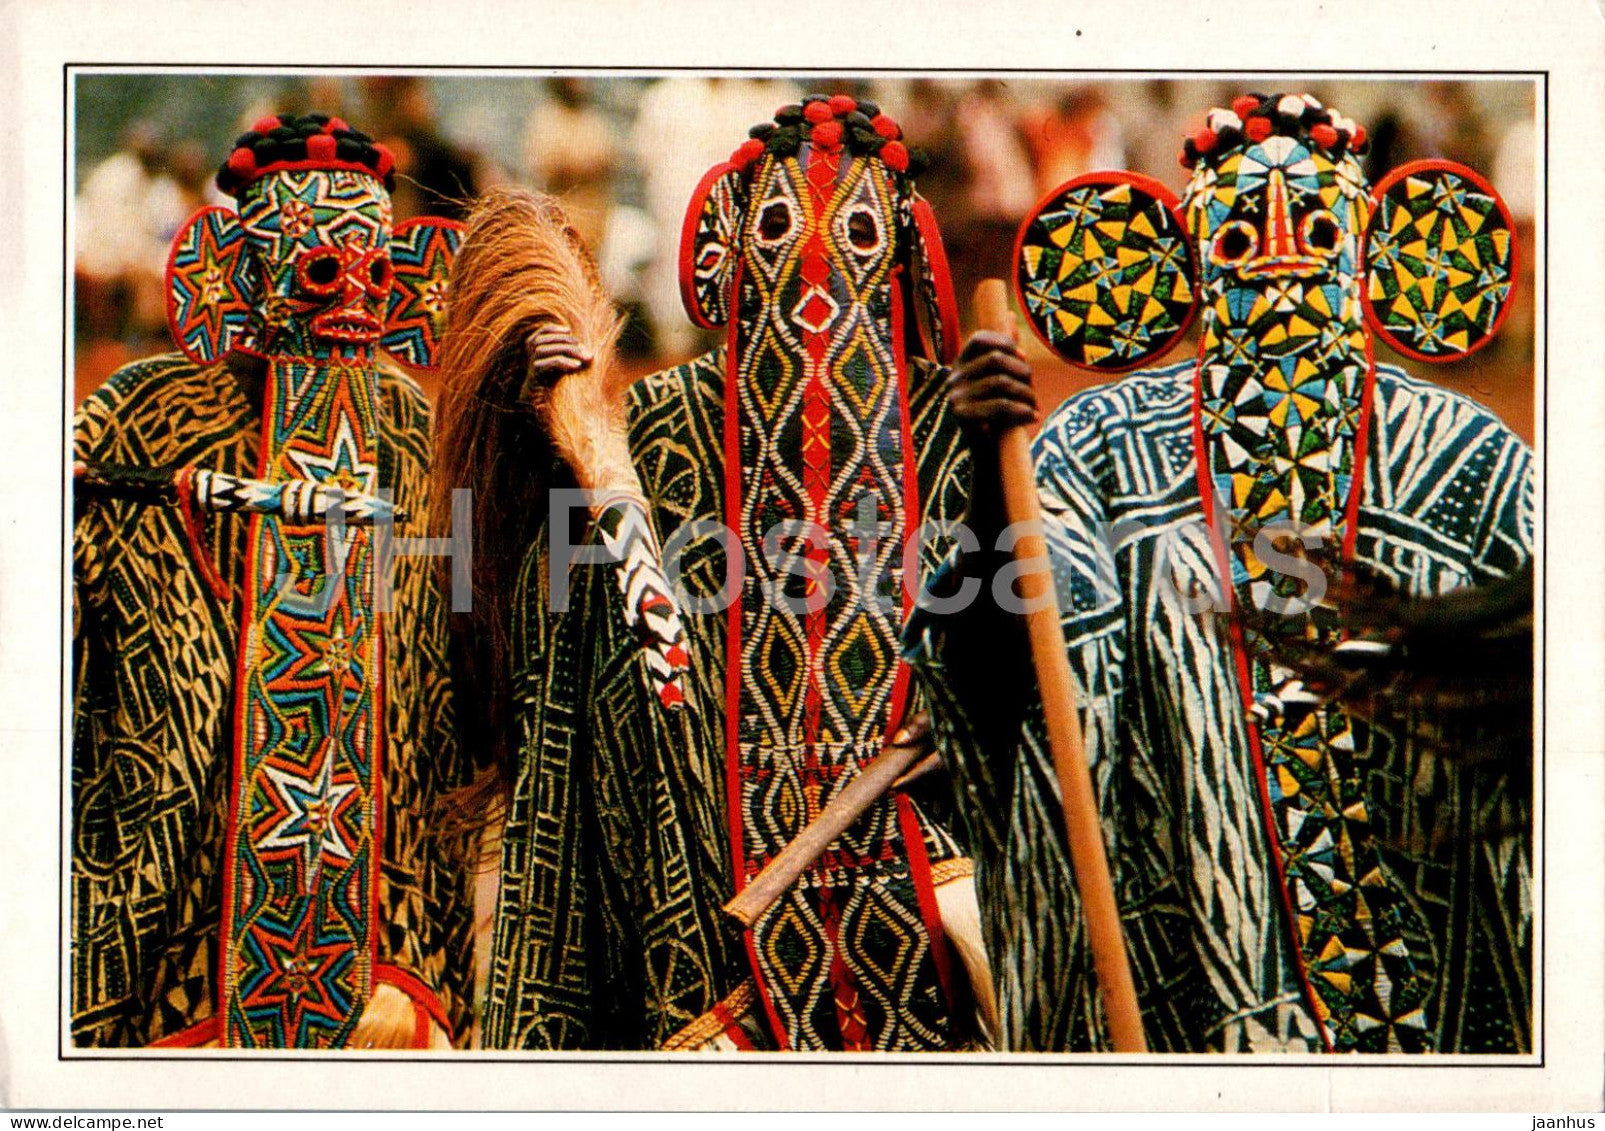 Bandjoun - Danseurs Bamilekes masques - Bamileke dancers masks - folk dance - folk costumes - Cameroon - used - JH Postcards